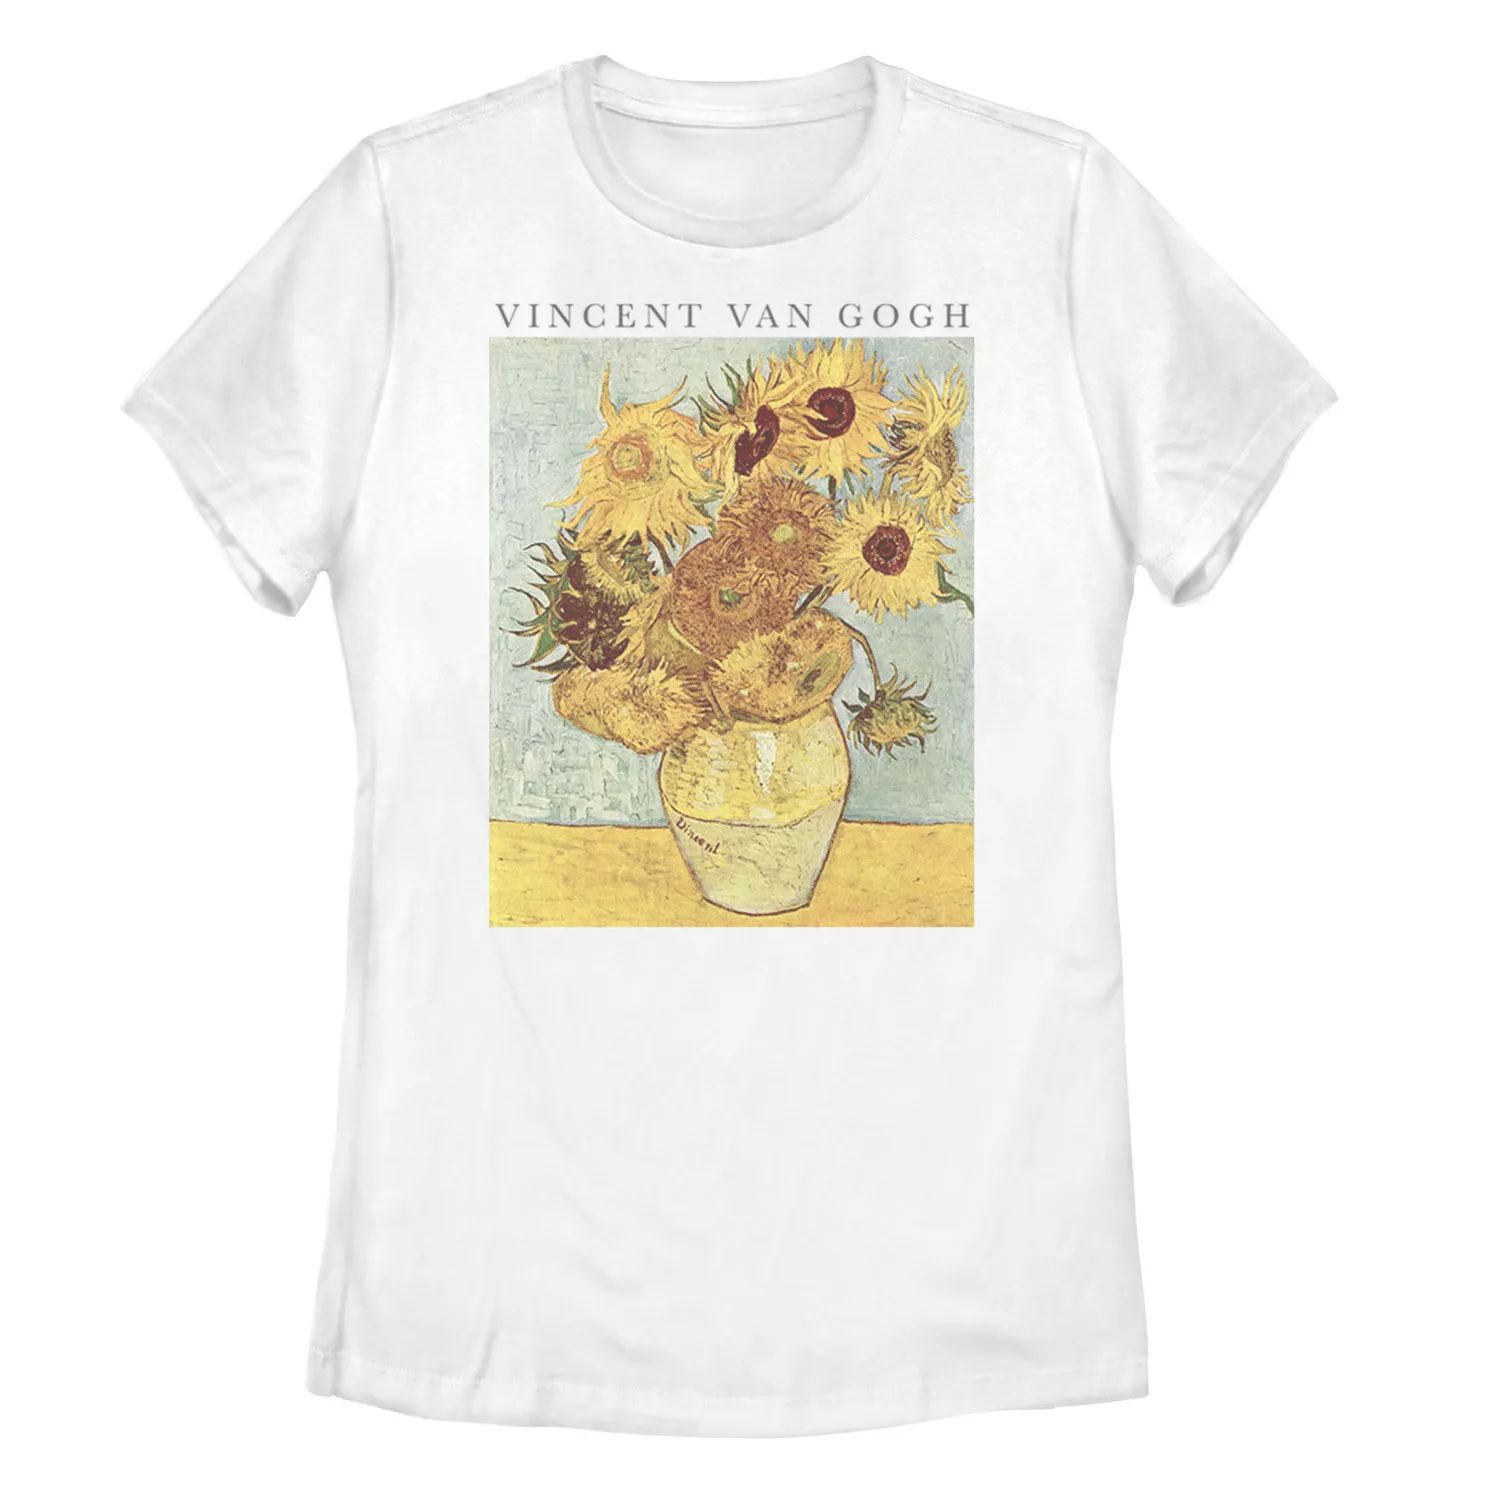 Детская футболка с цветком Винсента Ван Гога детская футболка кот с цветком 164 синий